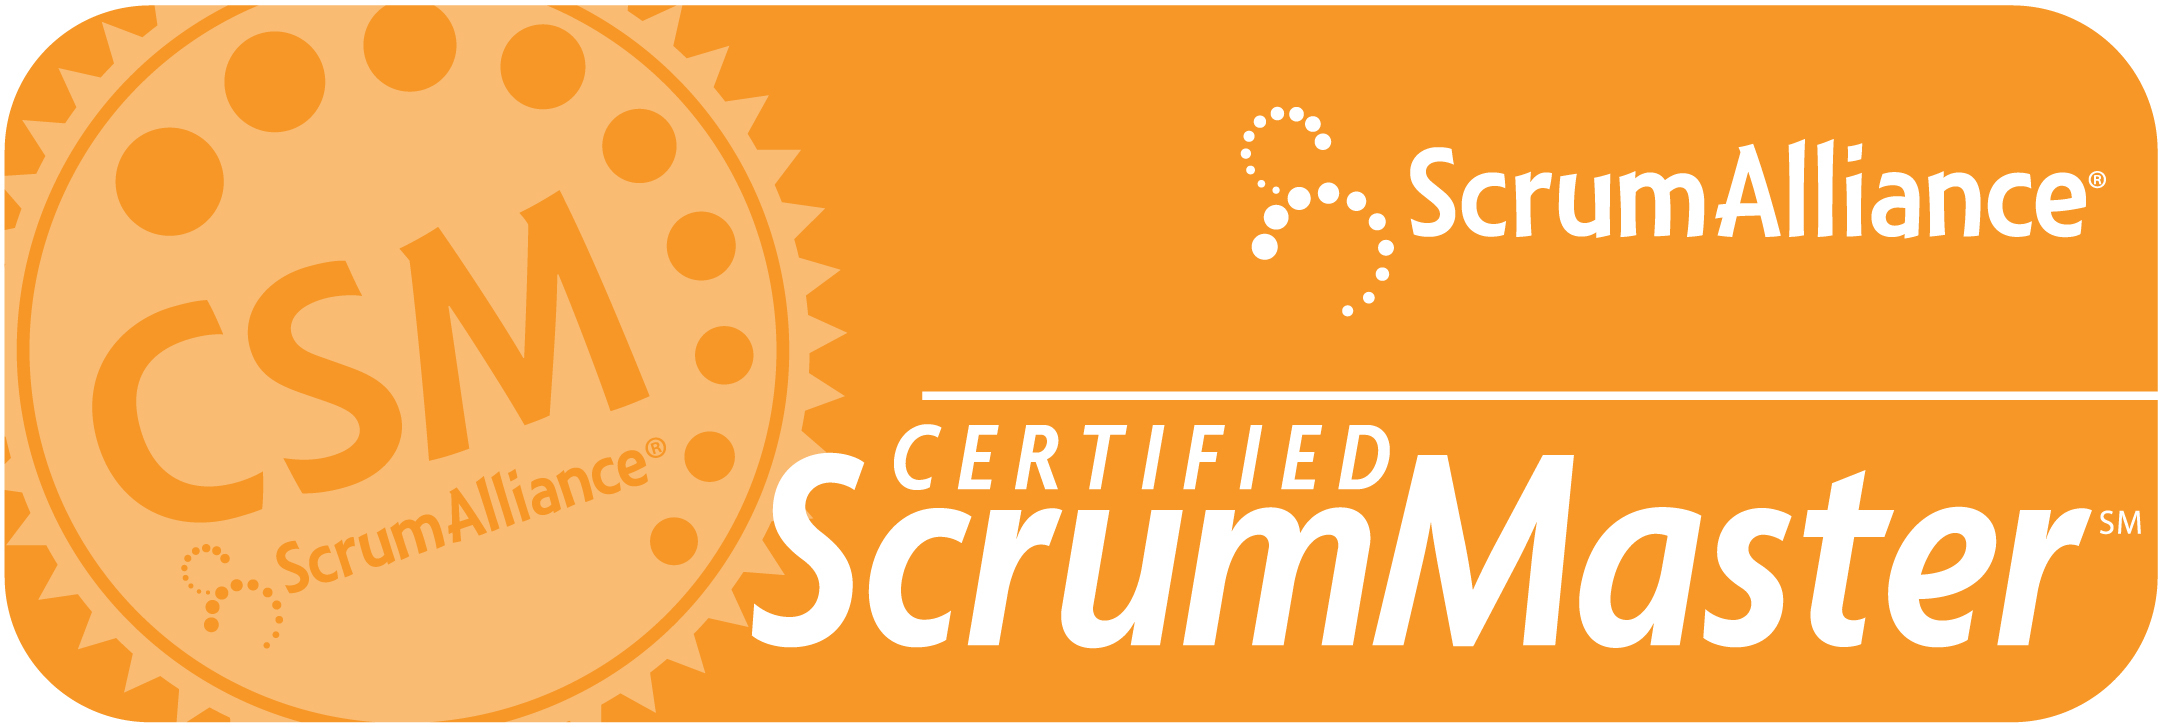 Image result for certified scrum master logo